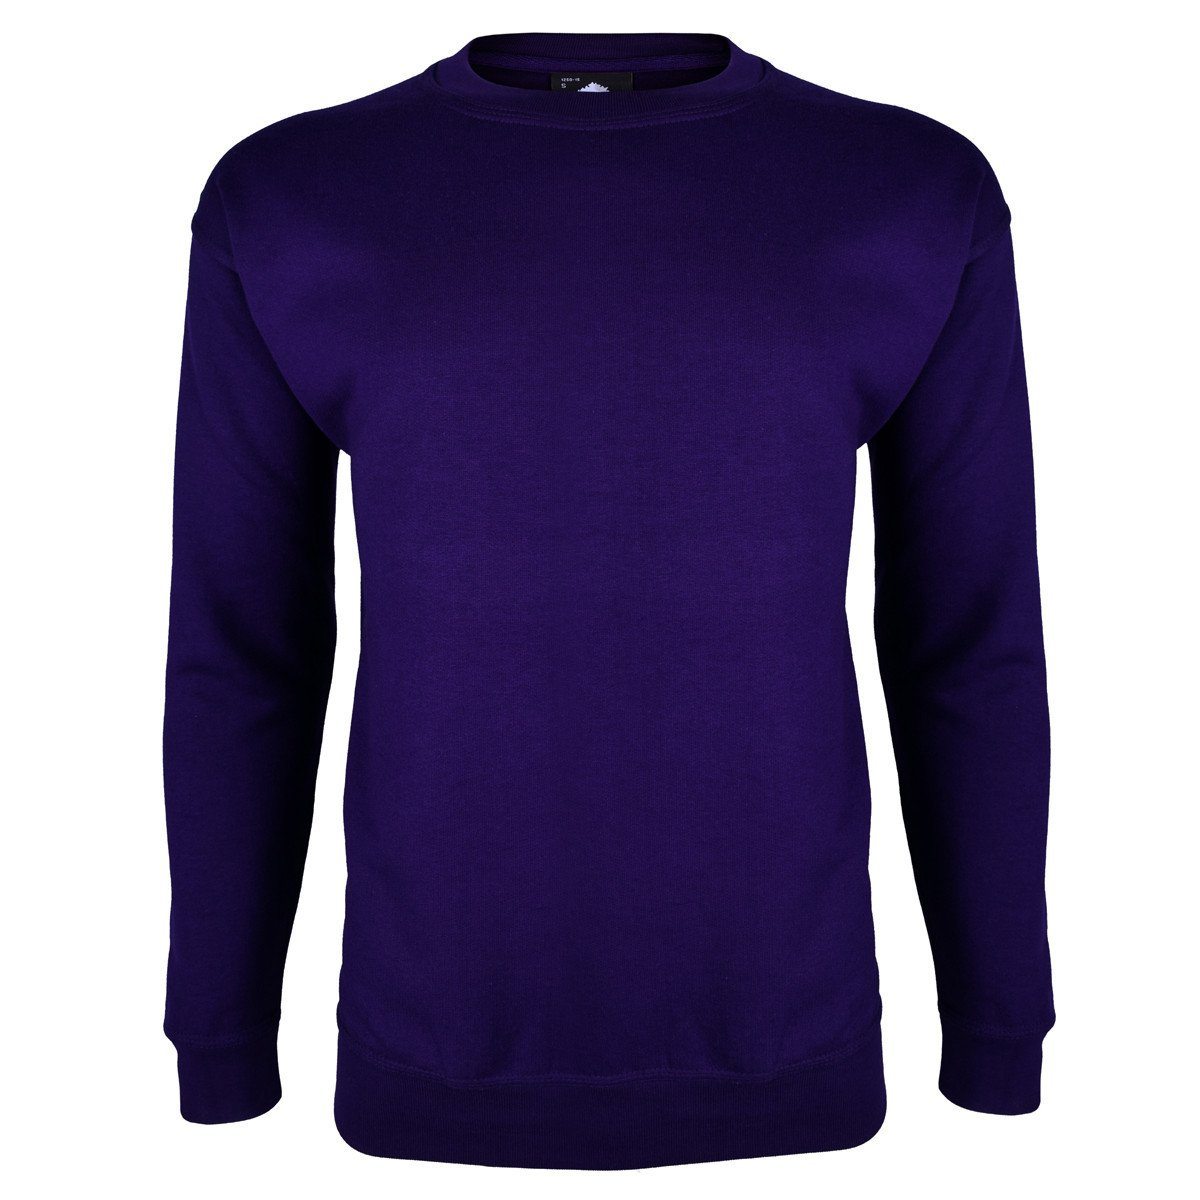 Kitrose Sweat Shirt Men's Sweat Shirt Image Purple M 